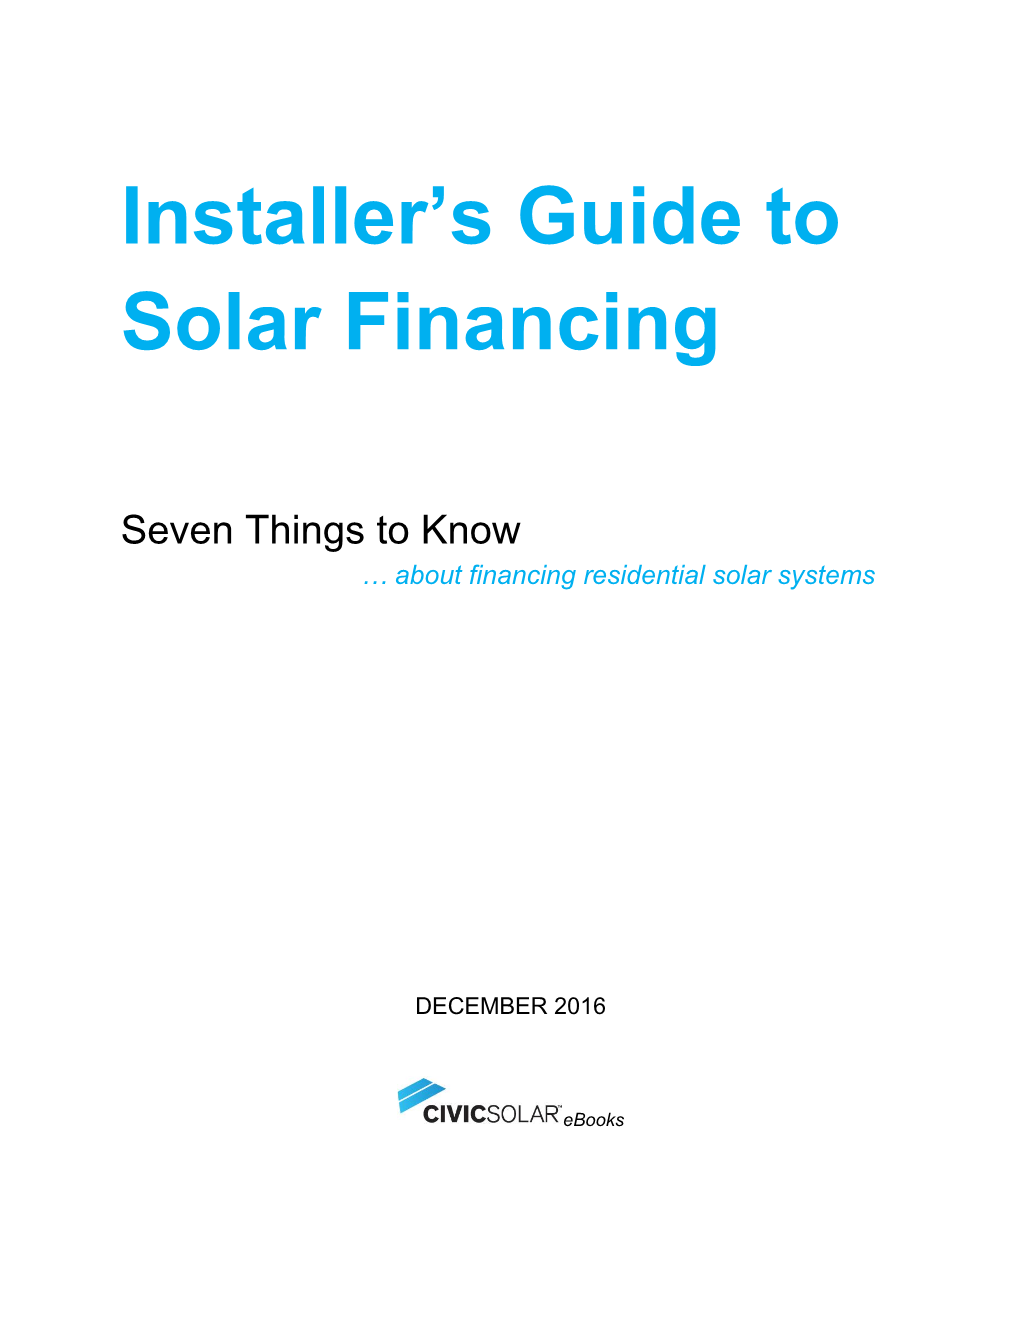 Installer's Guide to Solar Financing